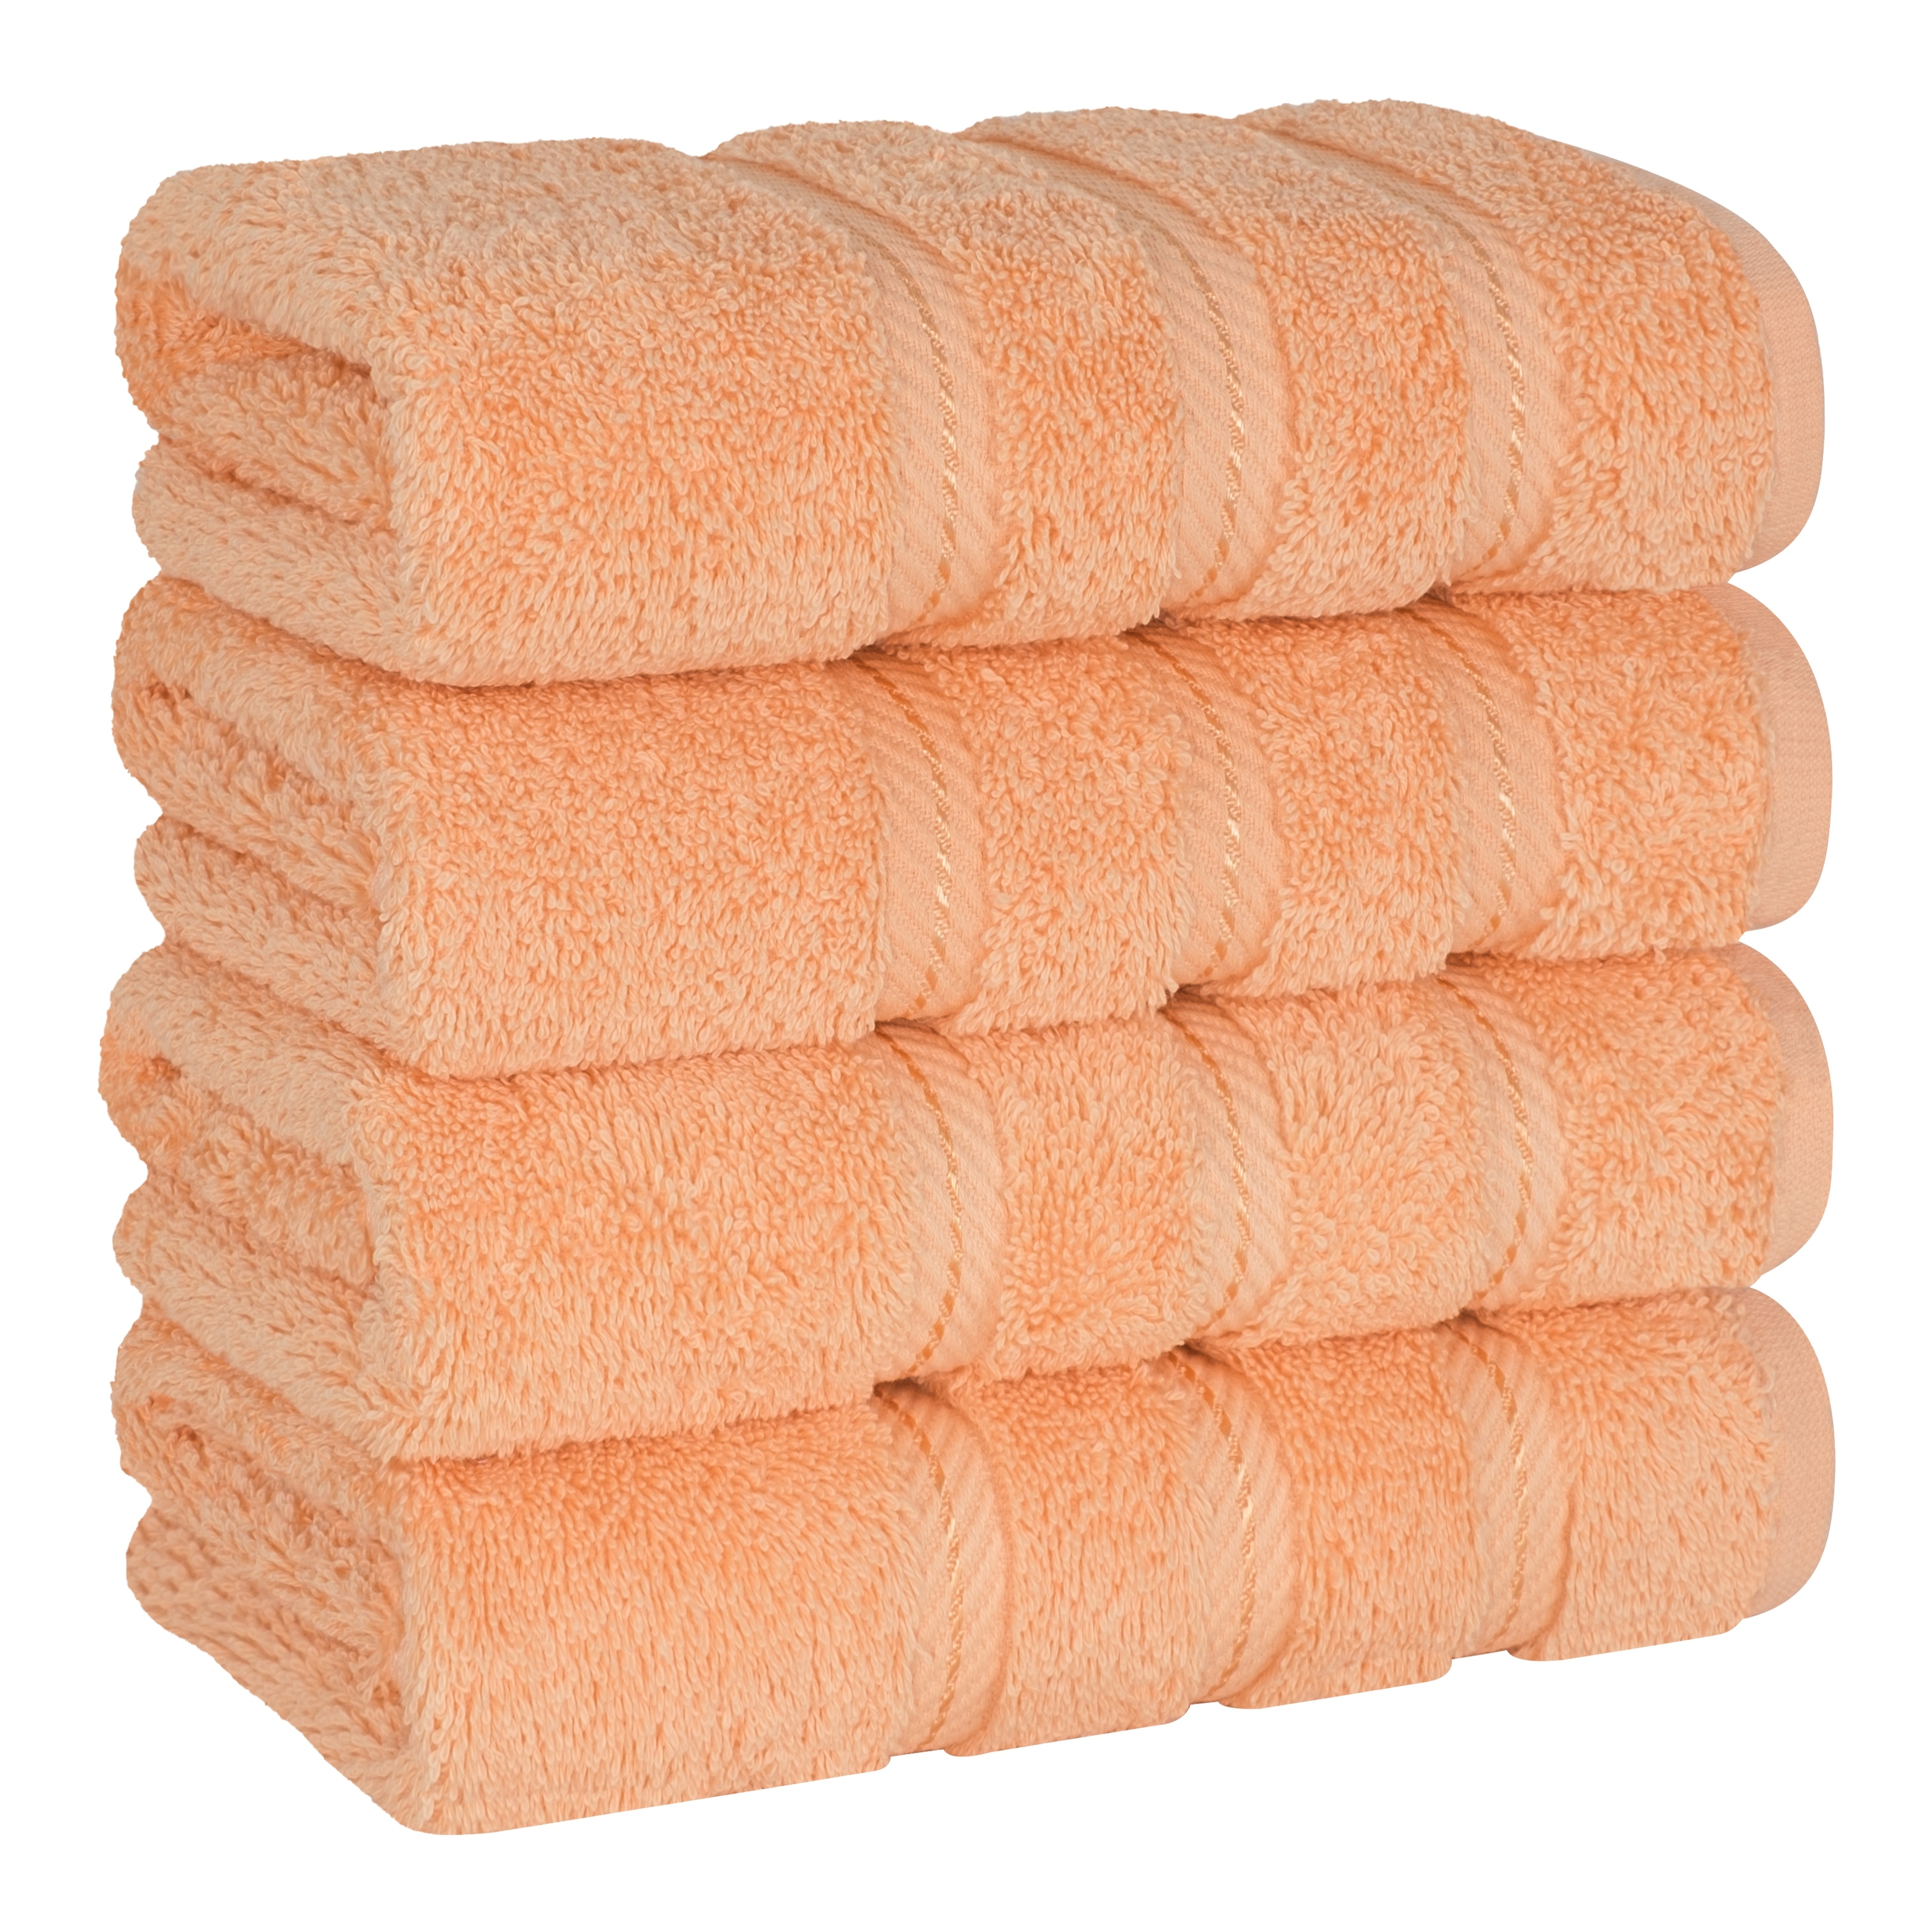 https://ak1.ostkcdn.com/images/products/is/images/direct/210b95b6da40a7d17975271ff972c5e9812d12ed/American-Soft-Linen-4-Piece-Turkish-Hand-Towel-Set.jpg